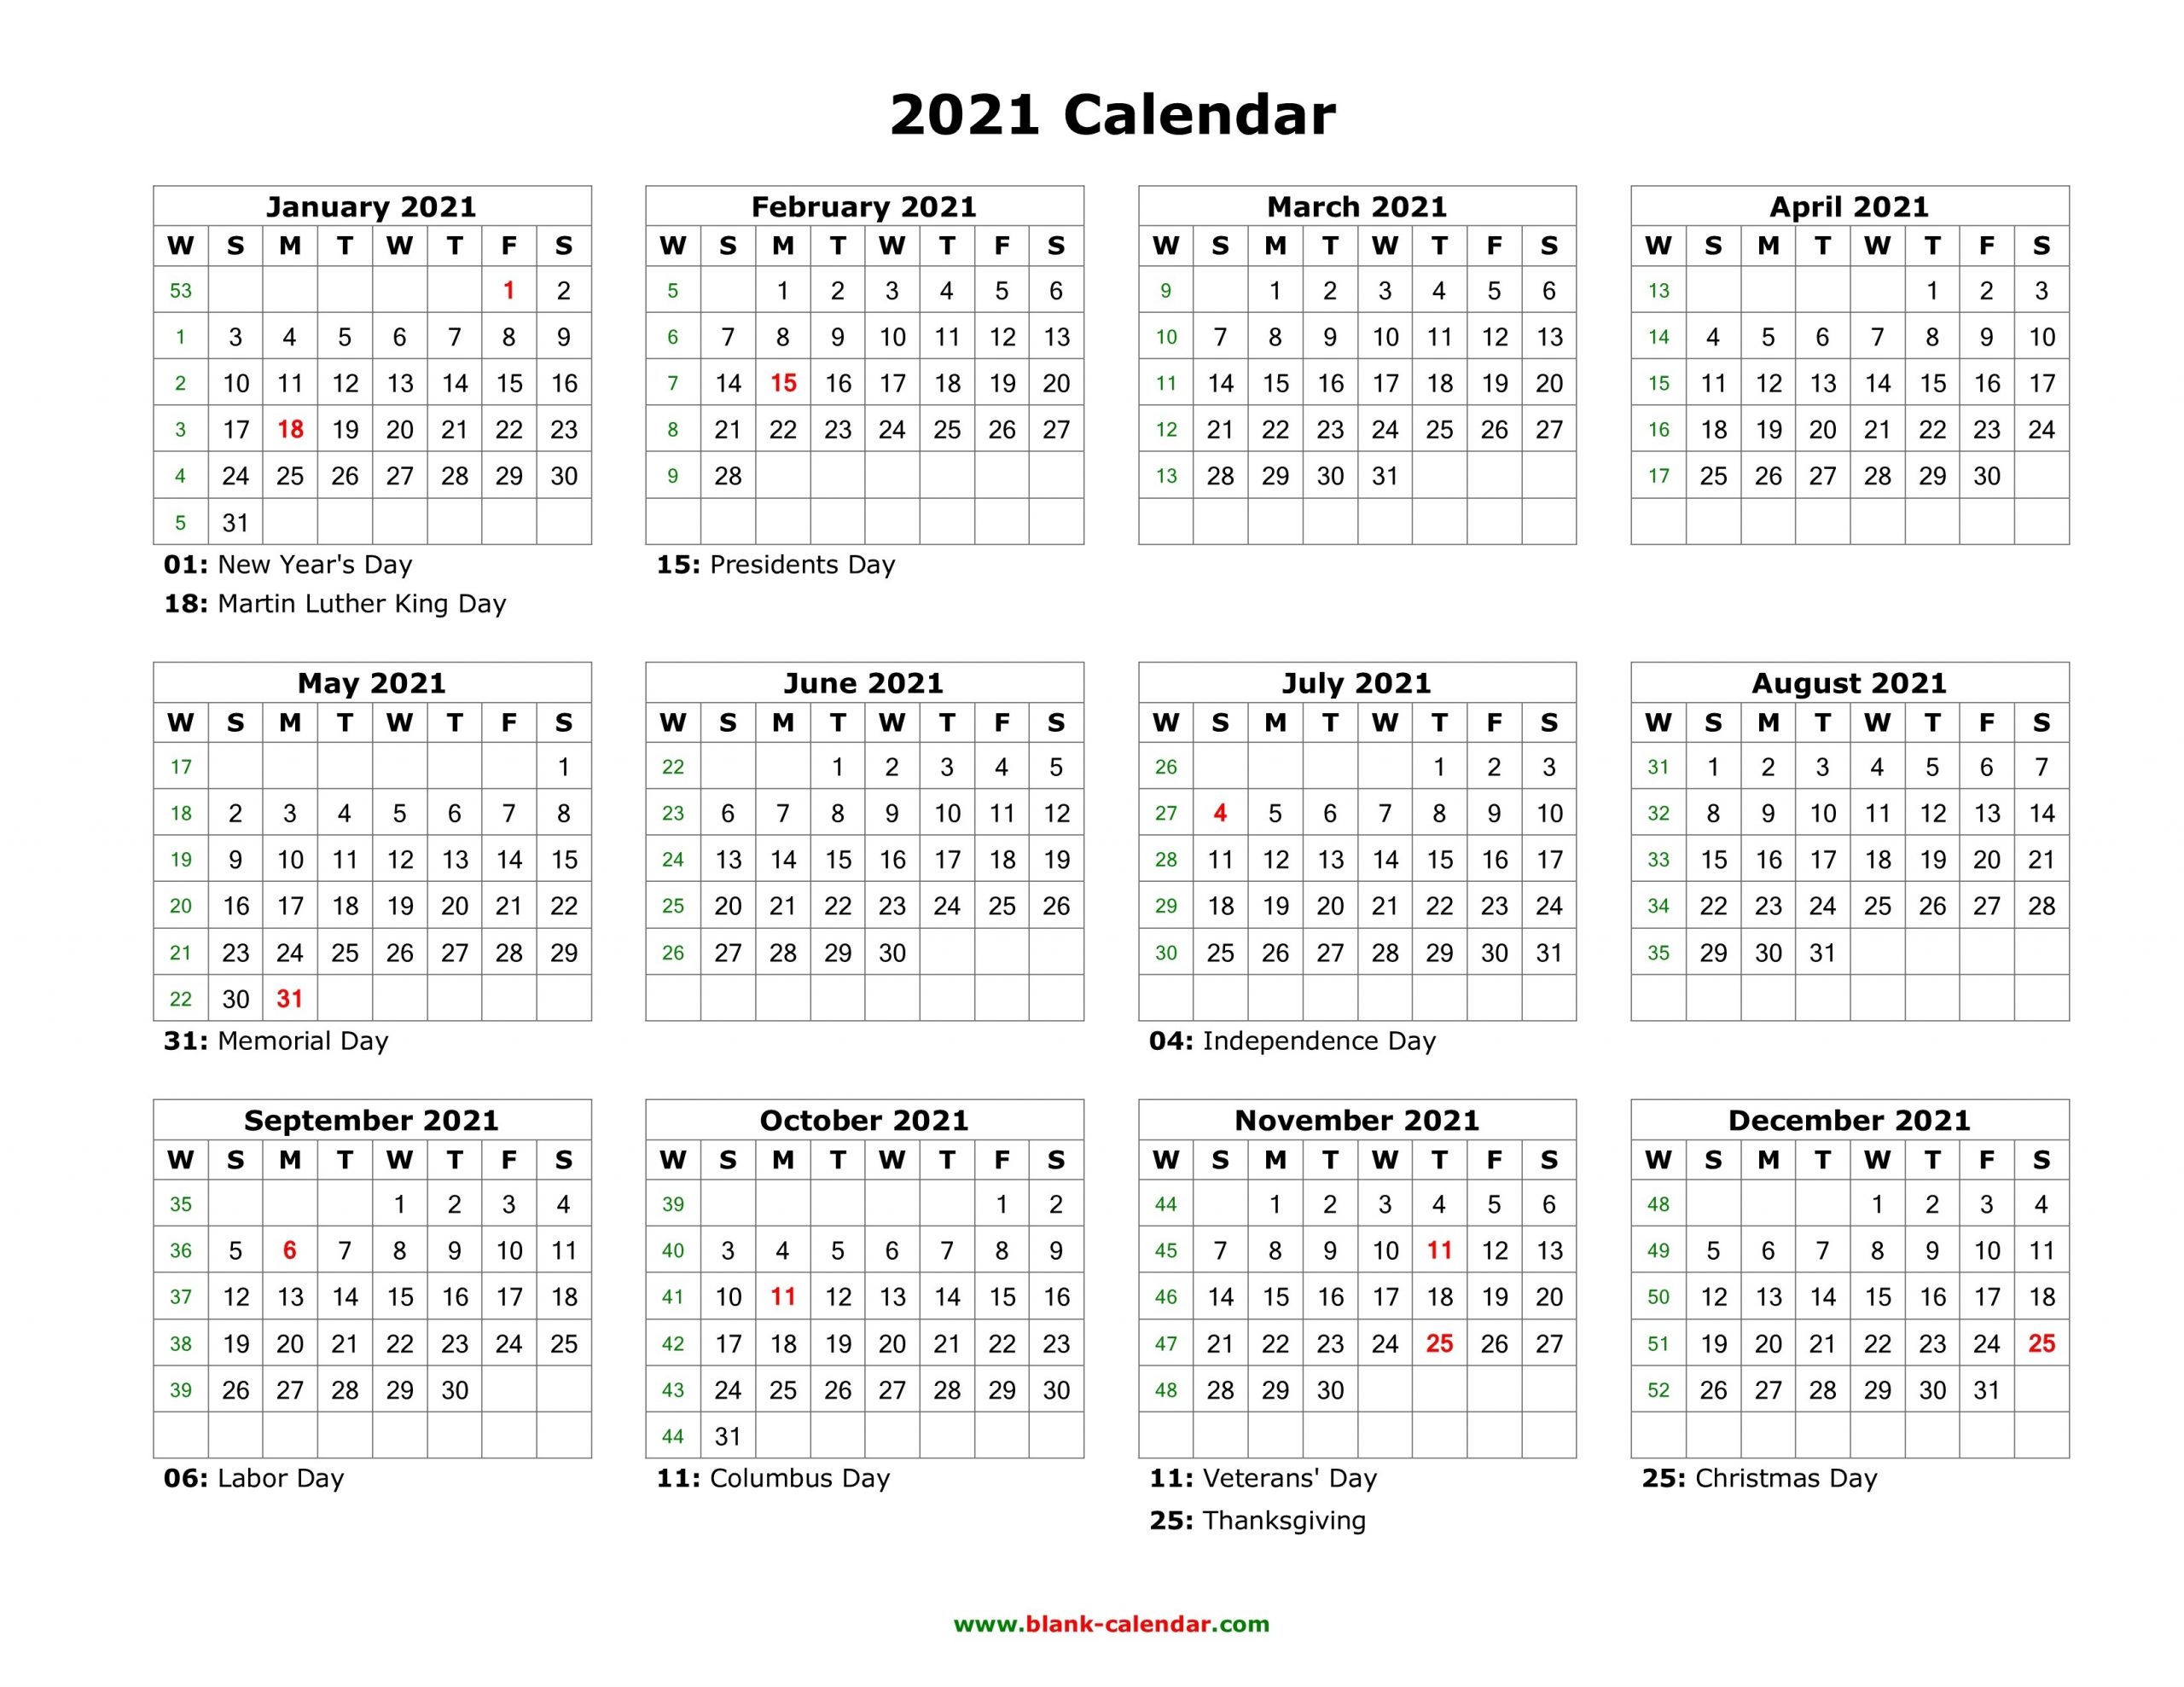 Blank Calendar 2021 | Free Download Calendar Templates-Microsoft Word 2021 Calendar Template